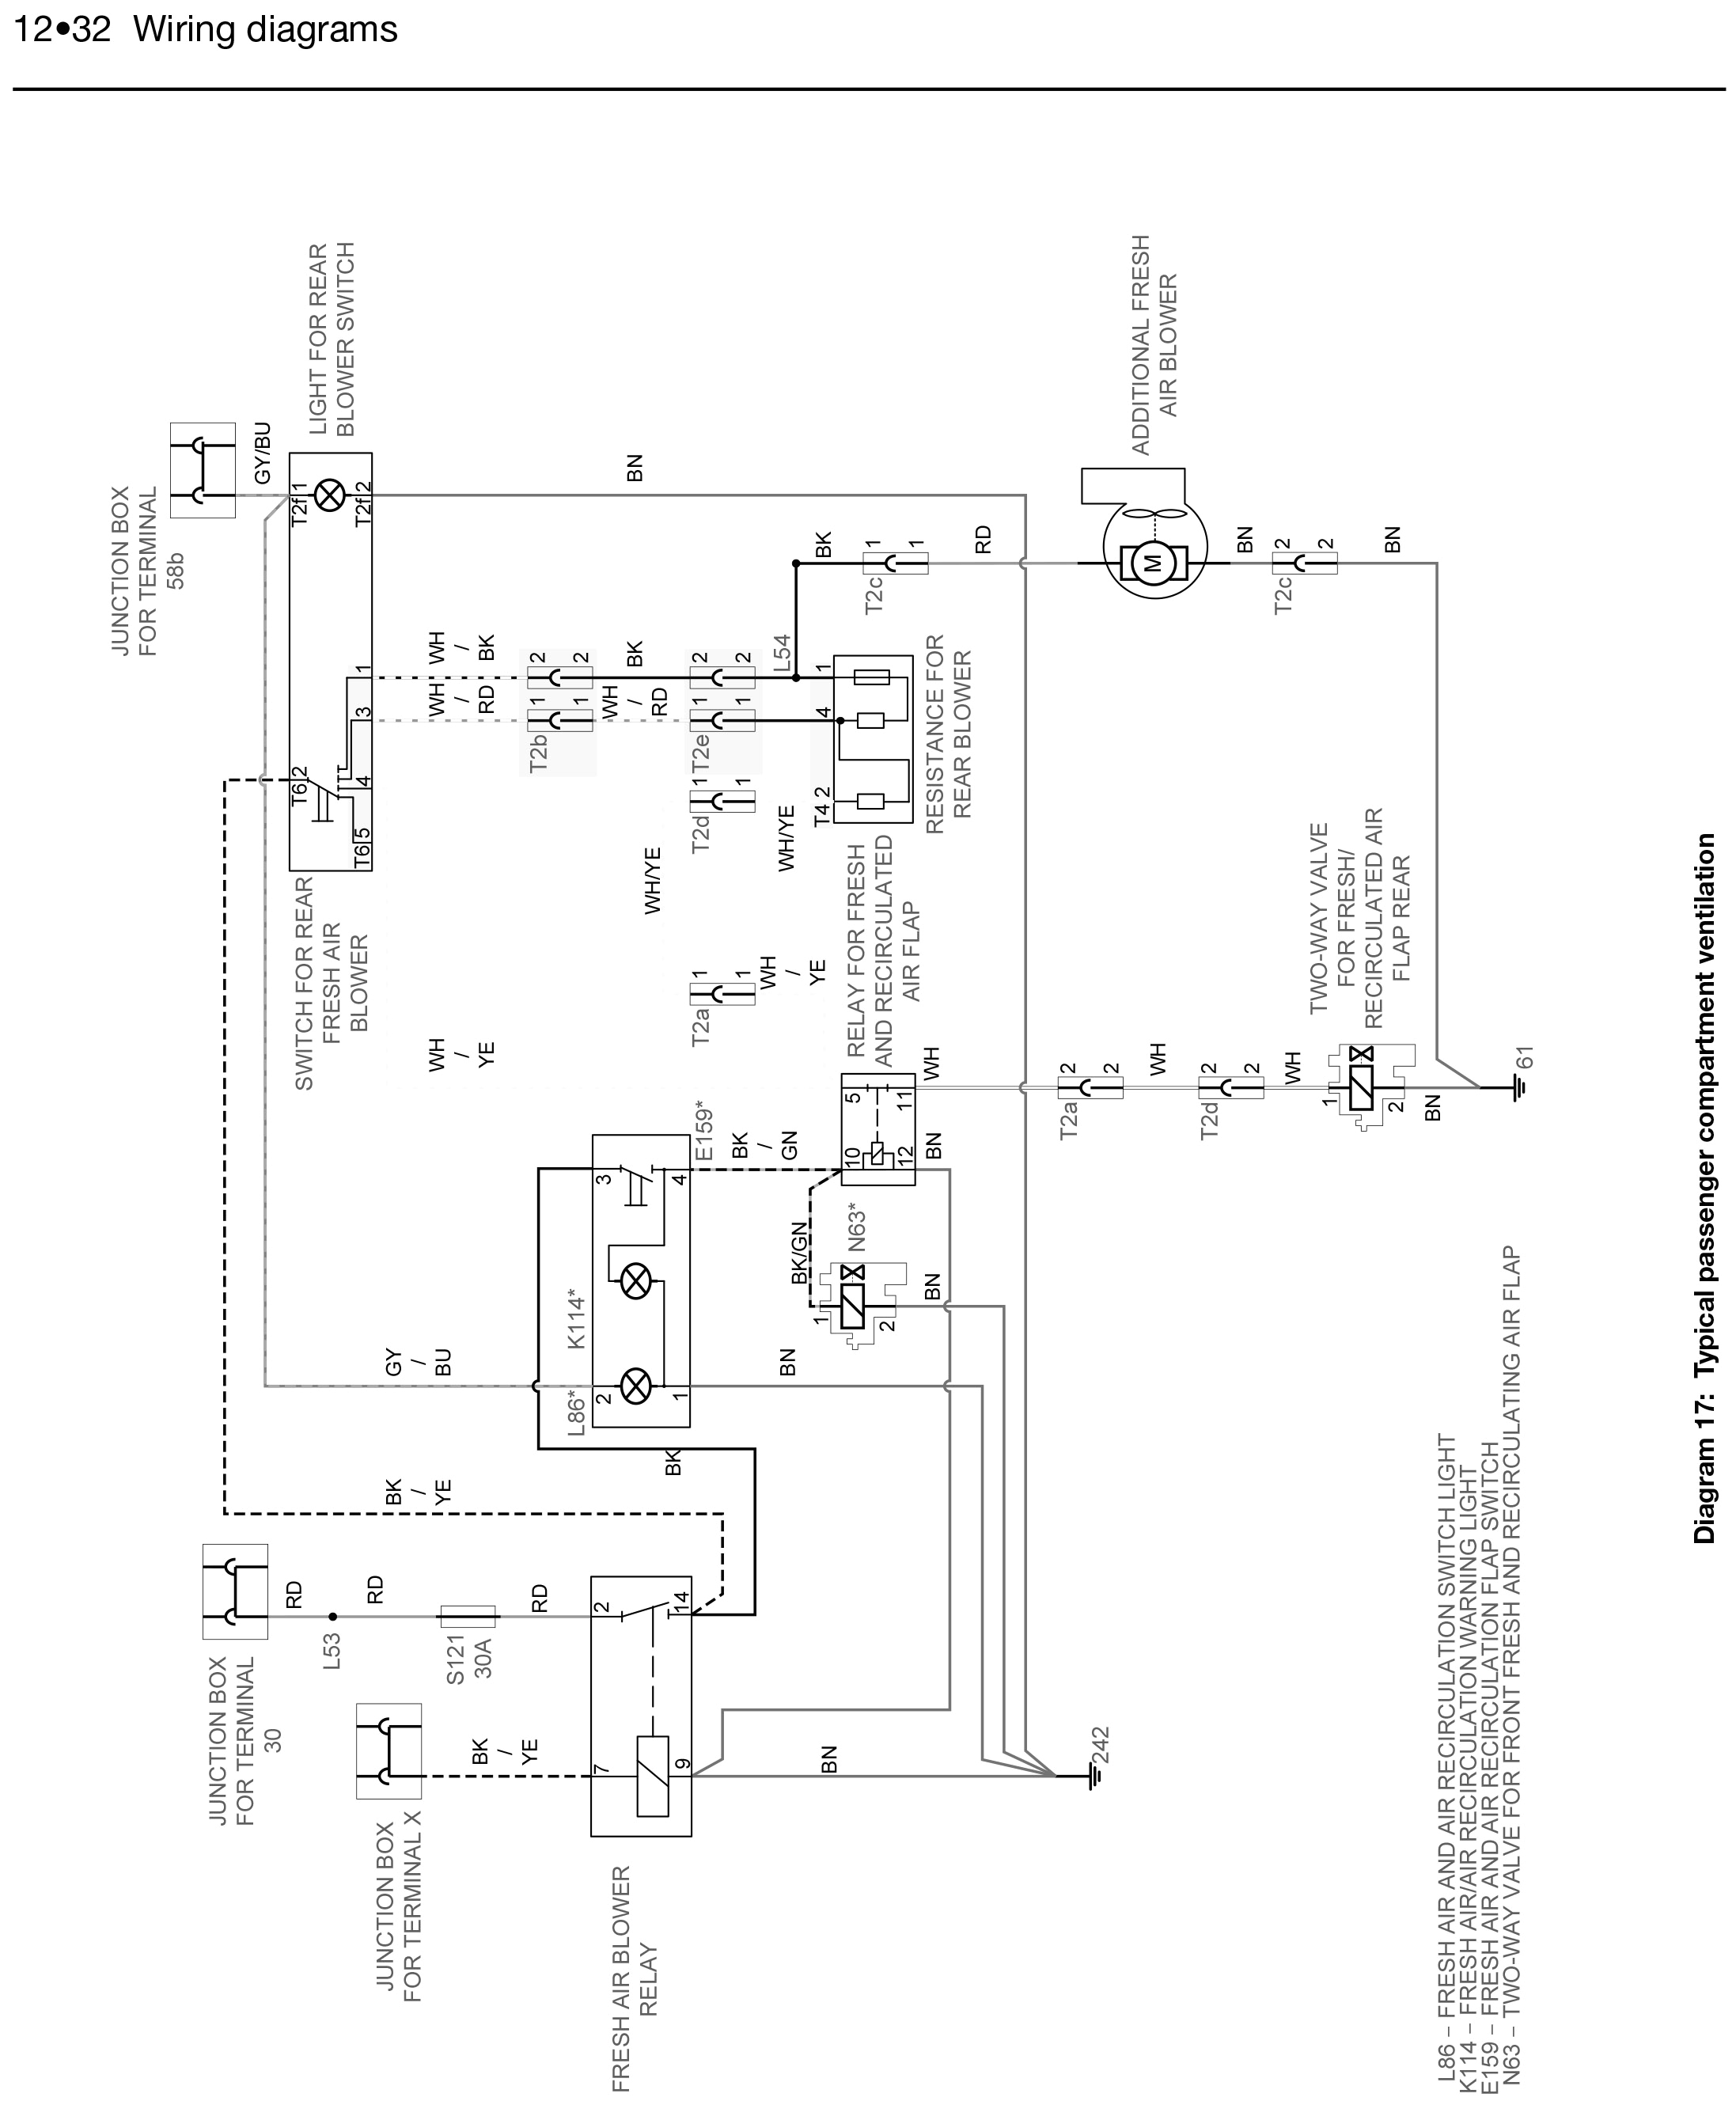 wiring diagram volkswagen t4 wiring diagram megawiring diagram vw transporter t4 wiring diagram today electrical wiring